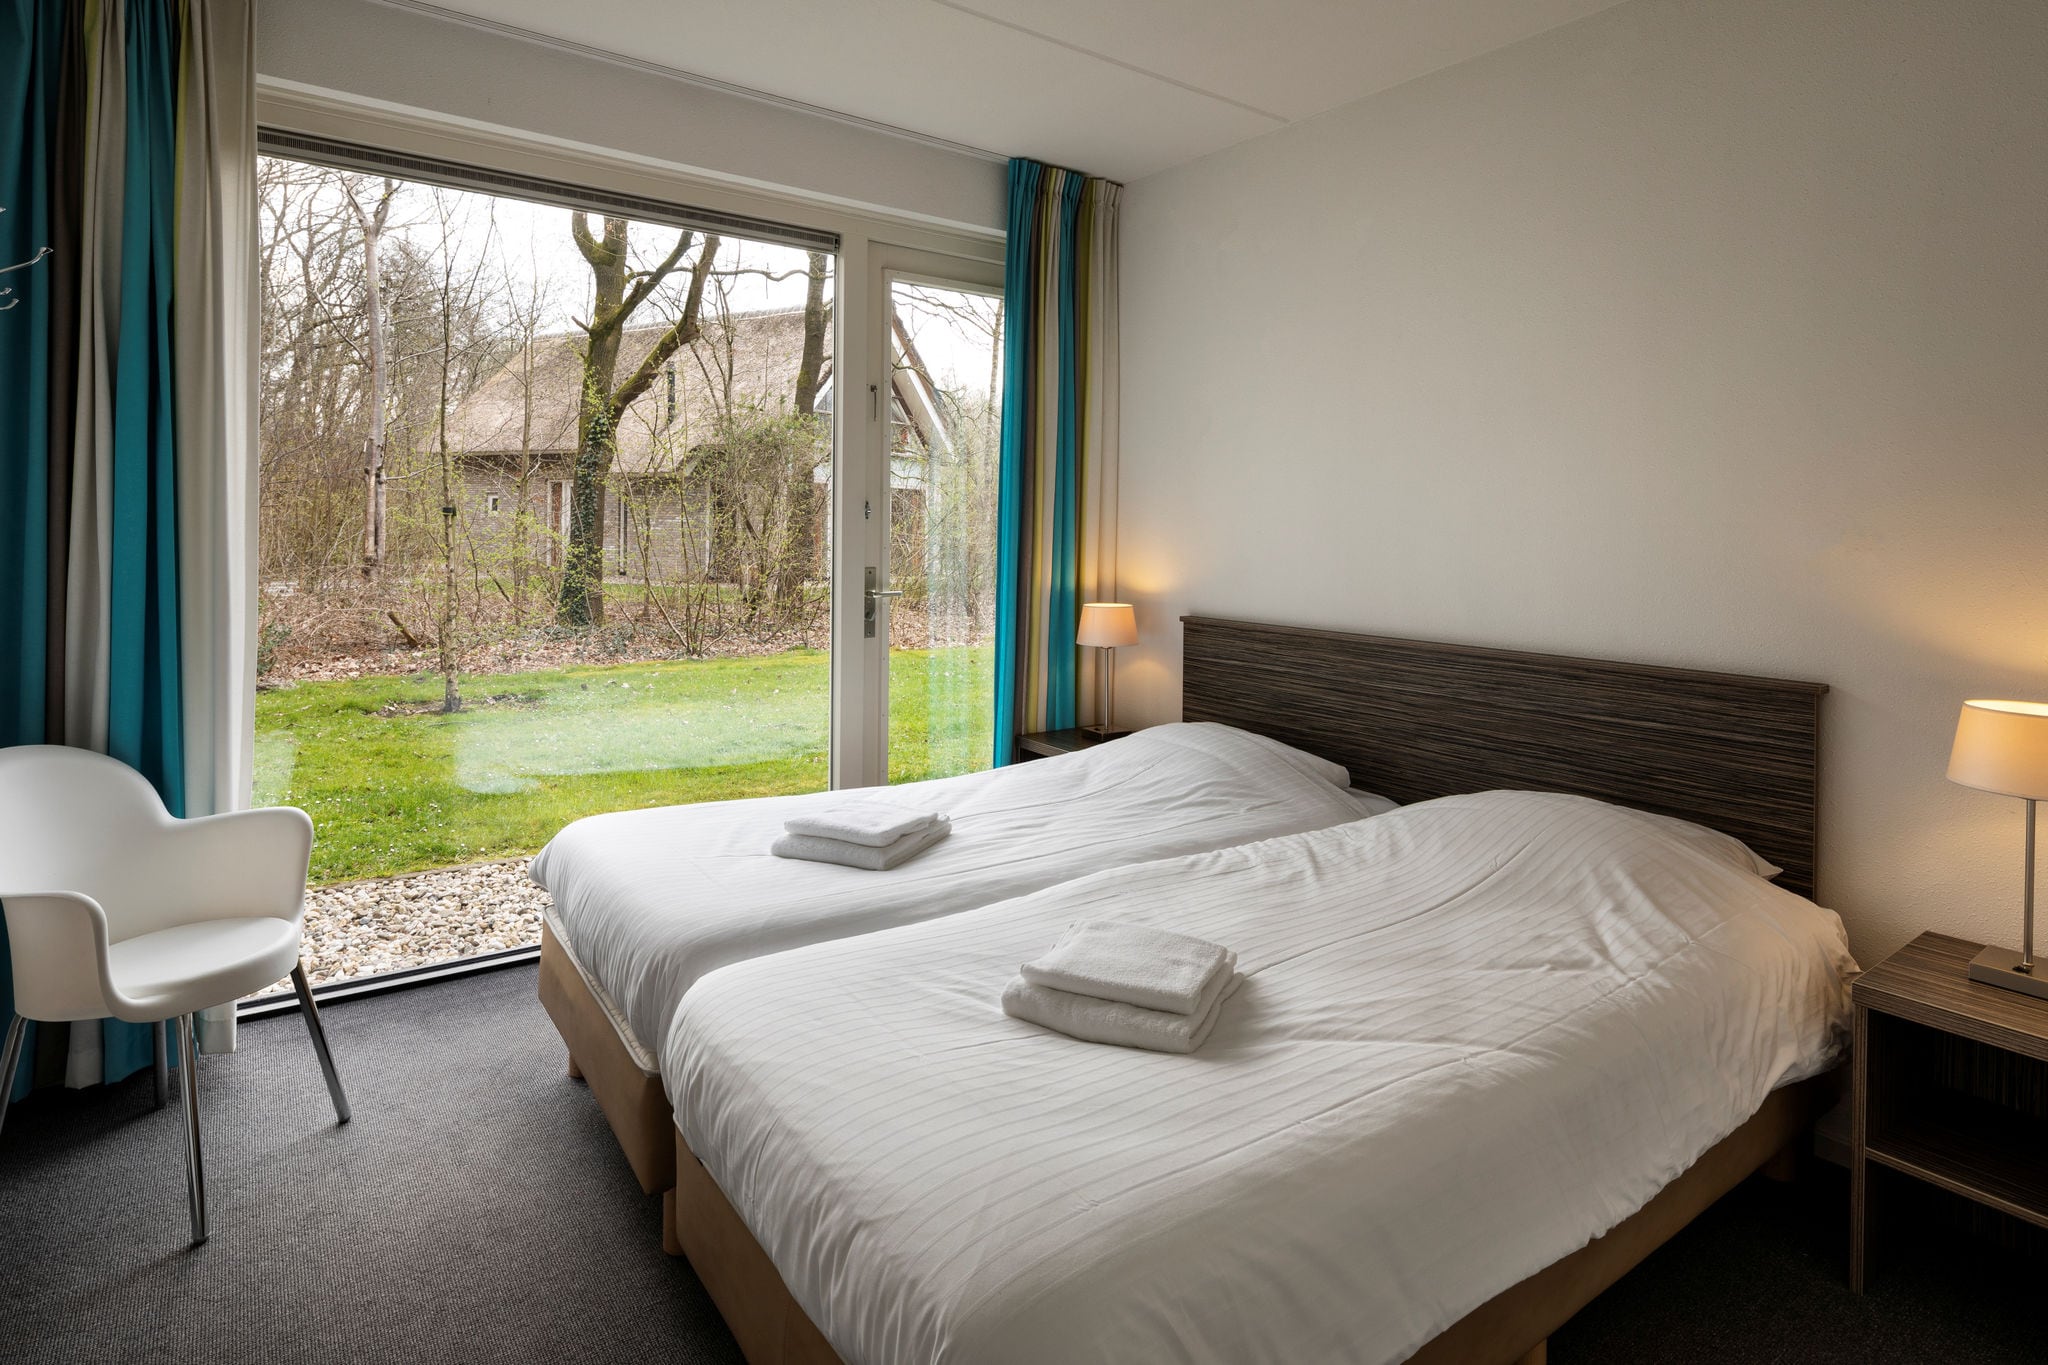 Villa en chaume avec 2 salles de bain, à 8 km d'Hoogeveen